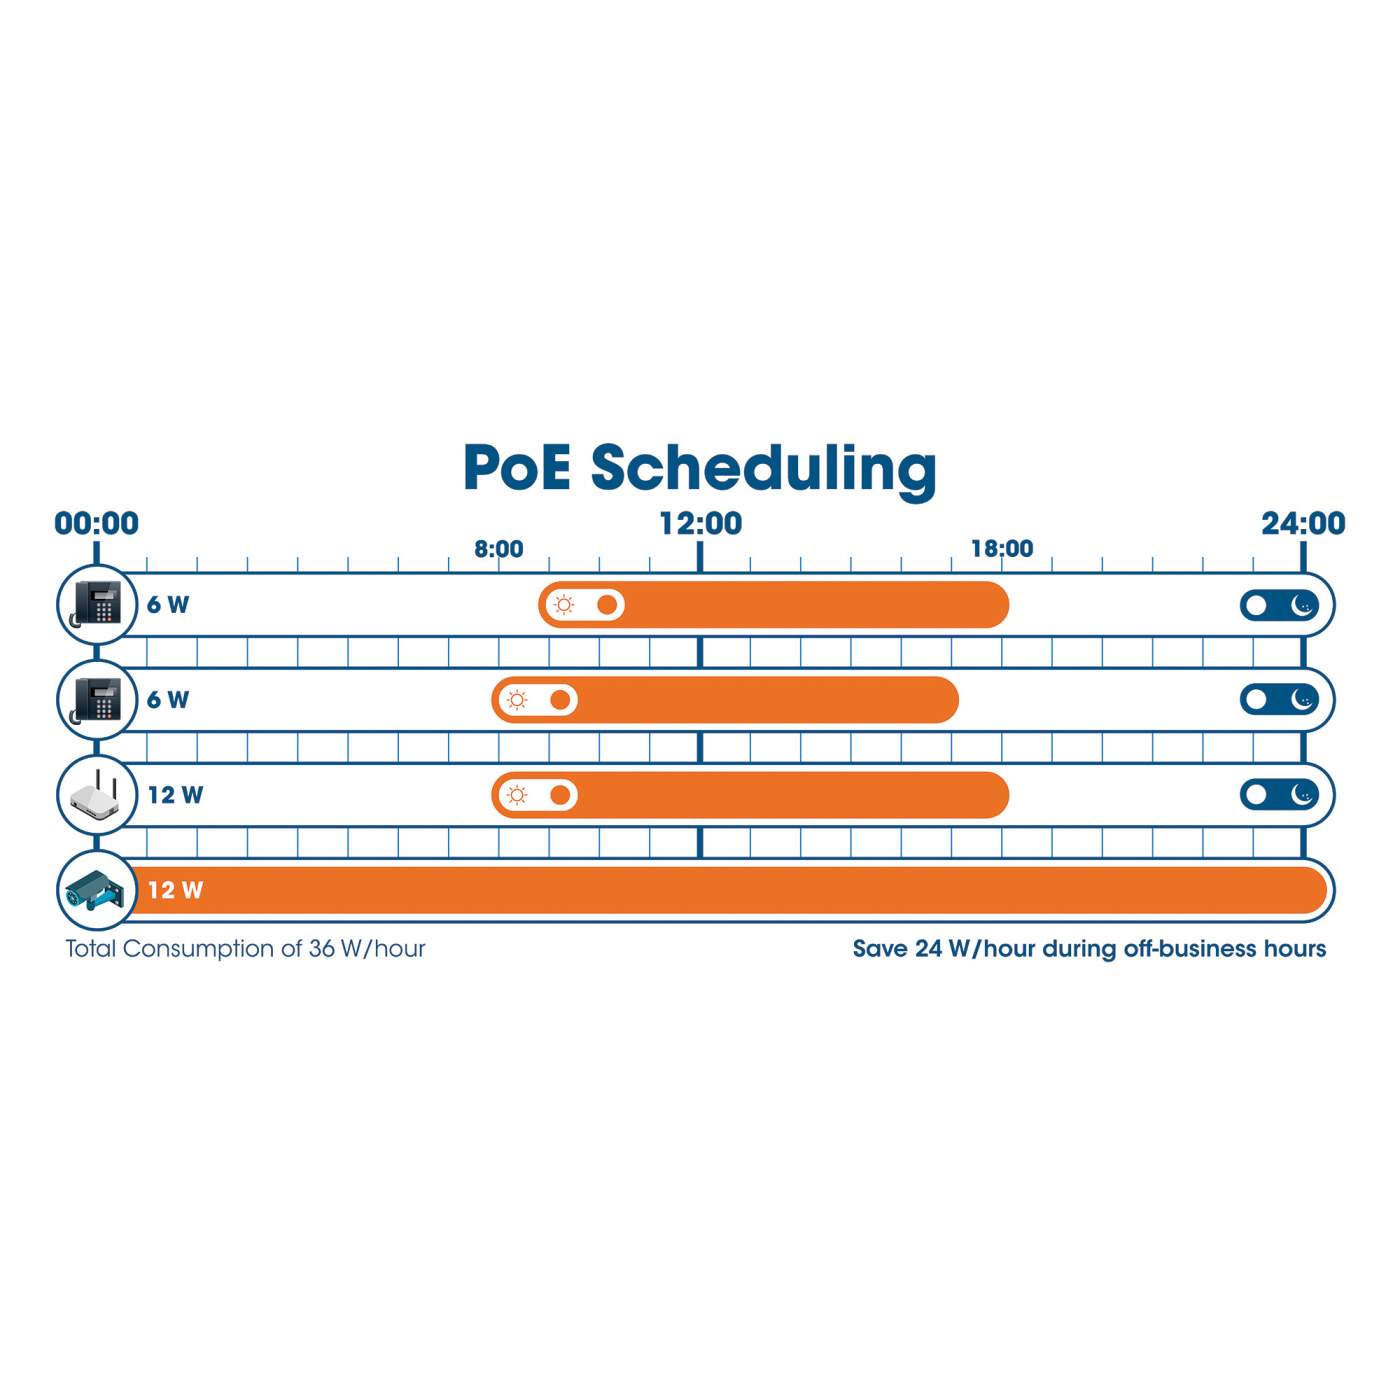 Intellinet Hardened 8-Port GbE PoE+ Switch w/ PoE Passthrough (561624)